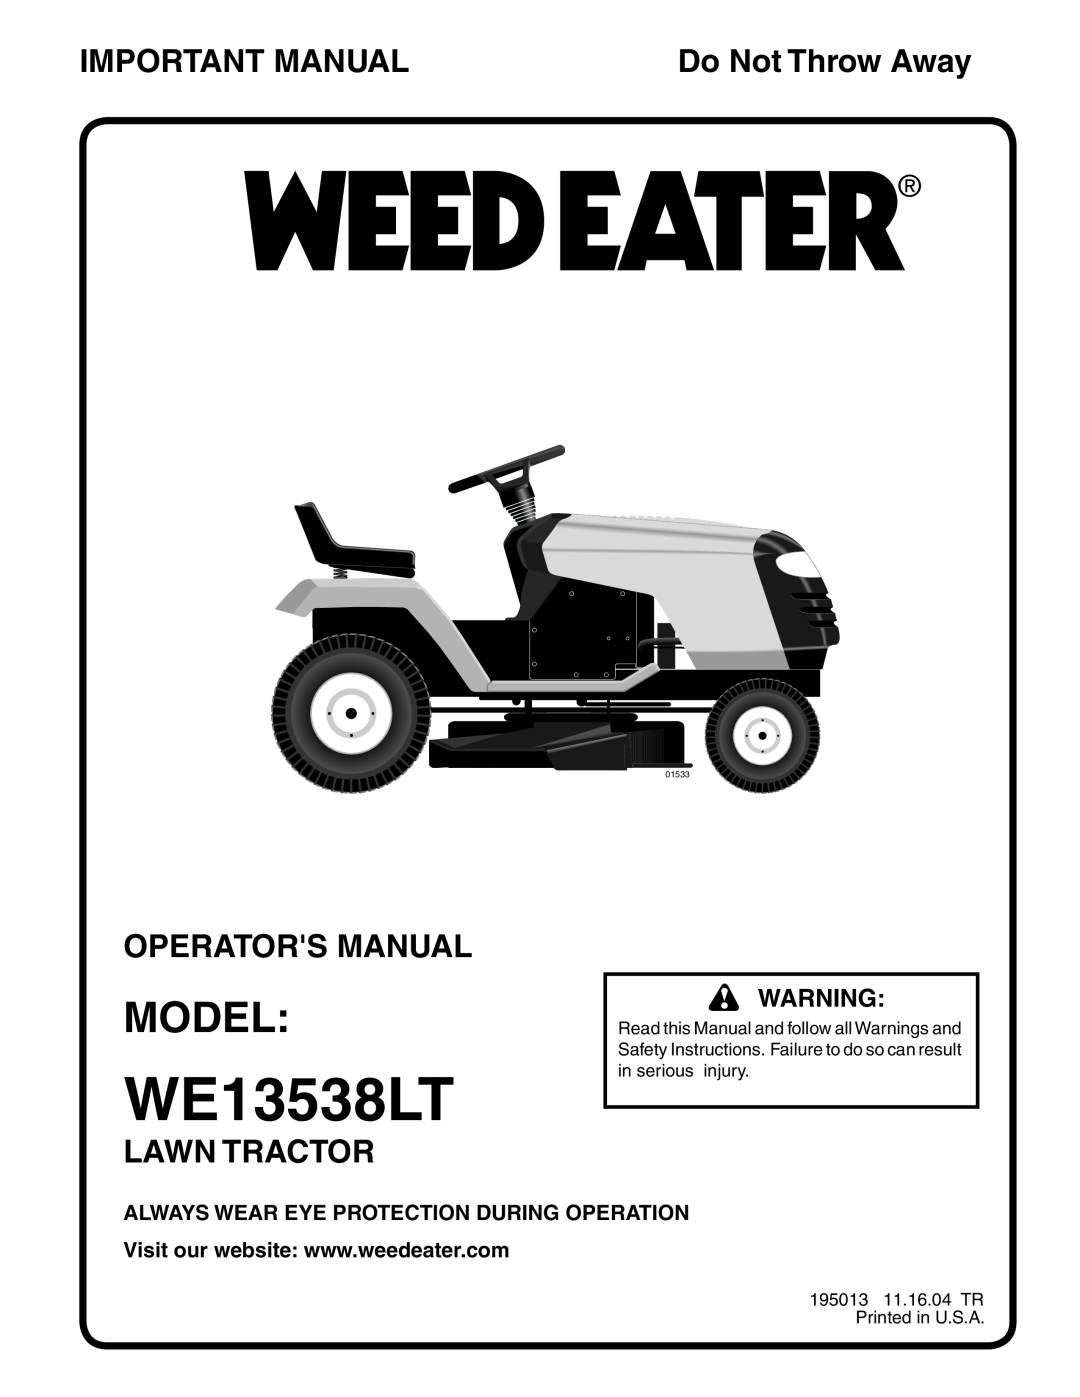 Poulan WE13538LT manual Model, Important Manual, Operators Manual, Lawn Tractor, Do Not Throw Away, 01533 